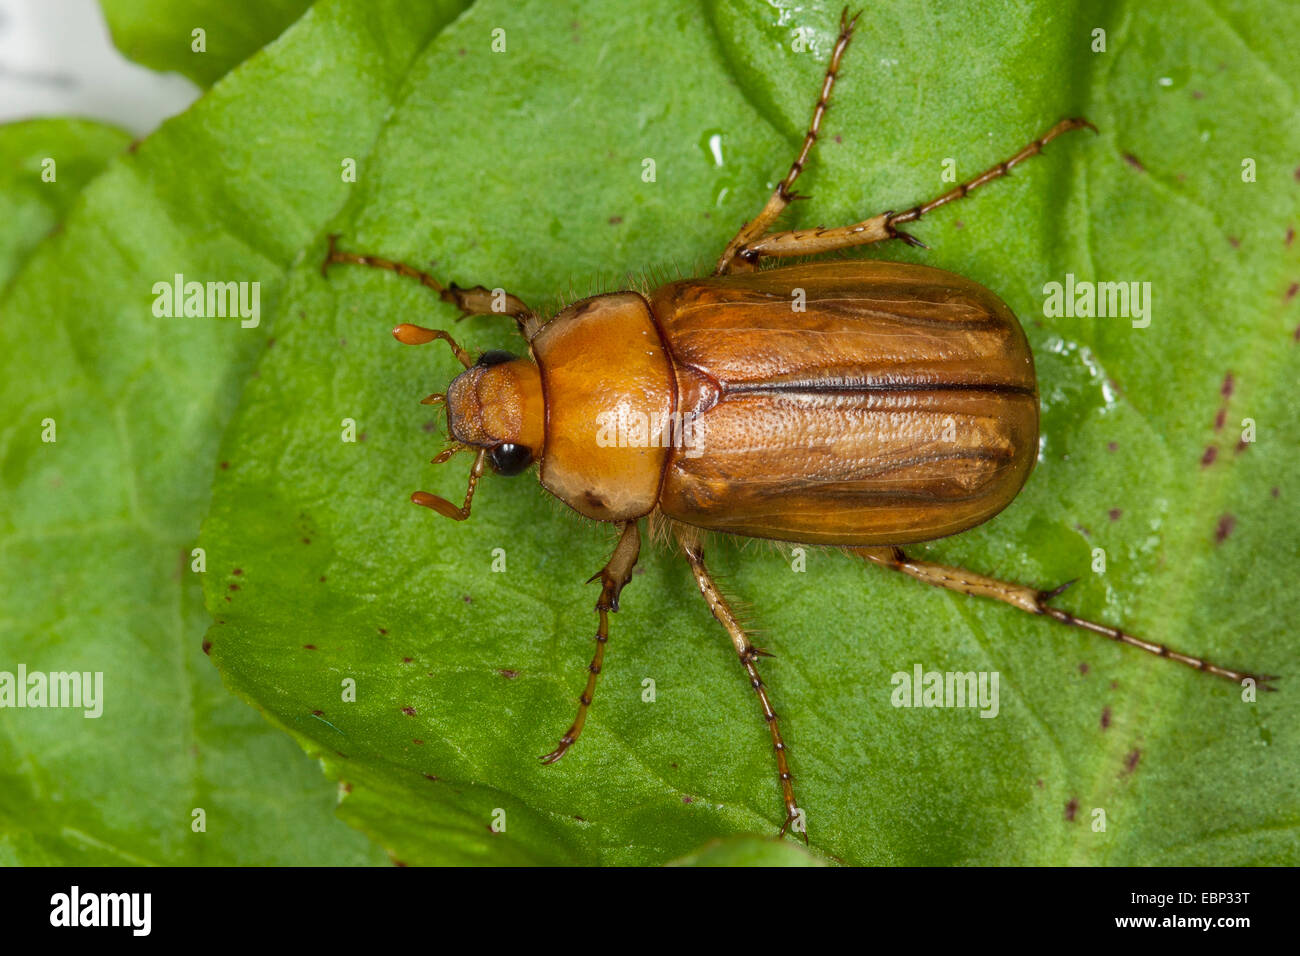 June bug (Rhizotrogus aestivus), on a leaf, Germany Stock Photo